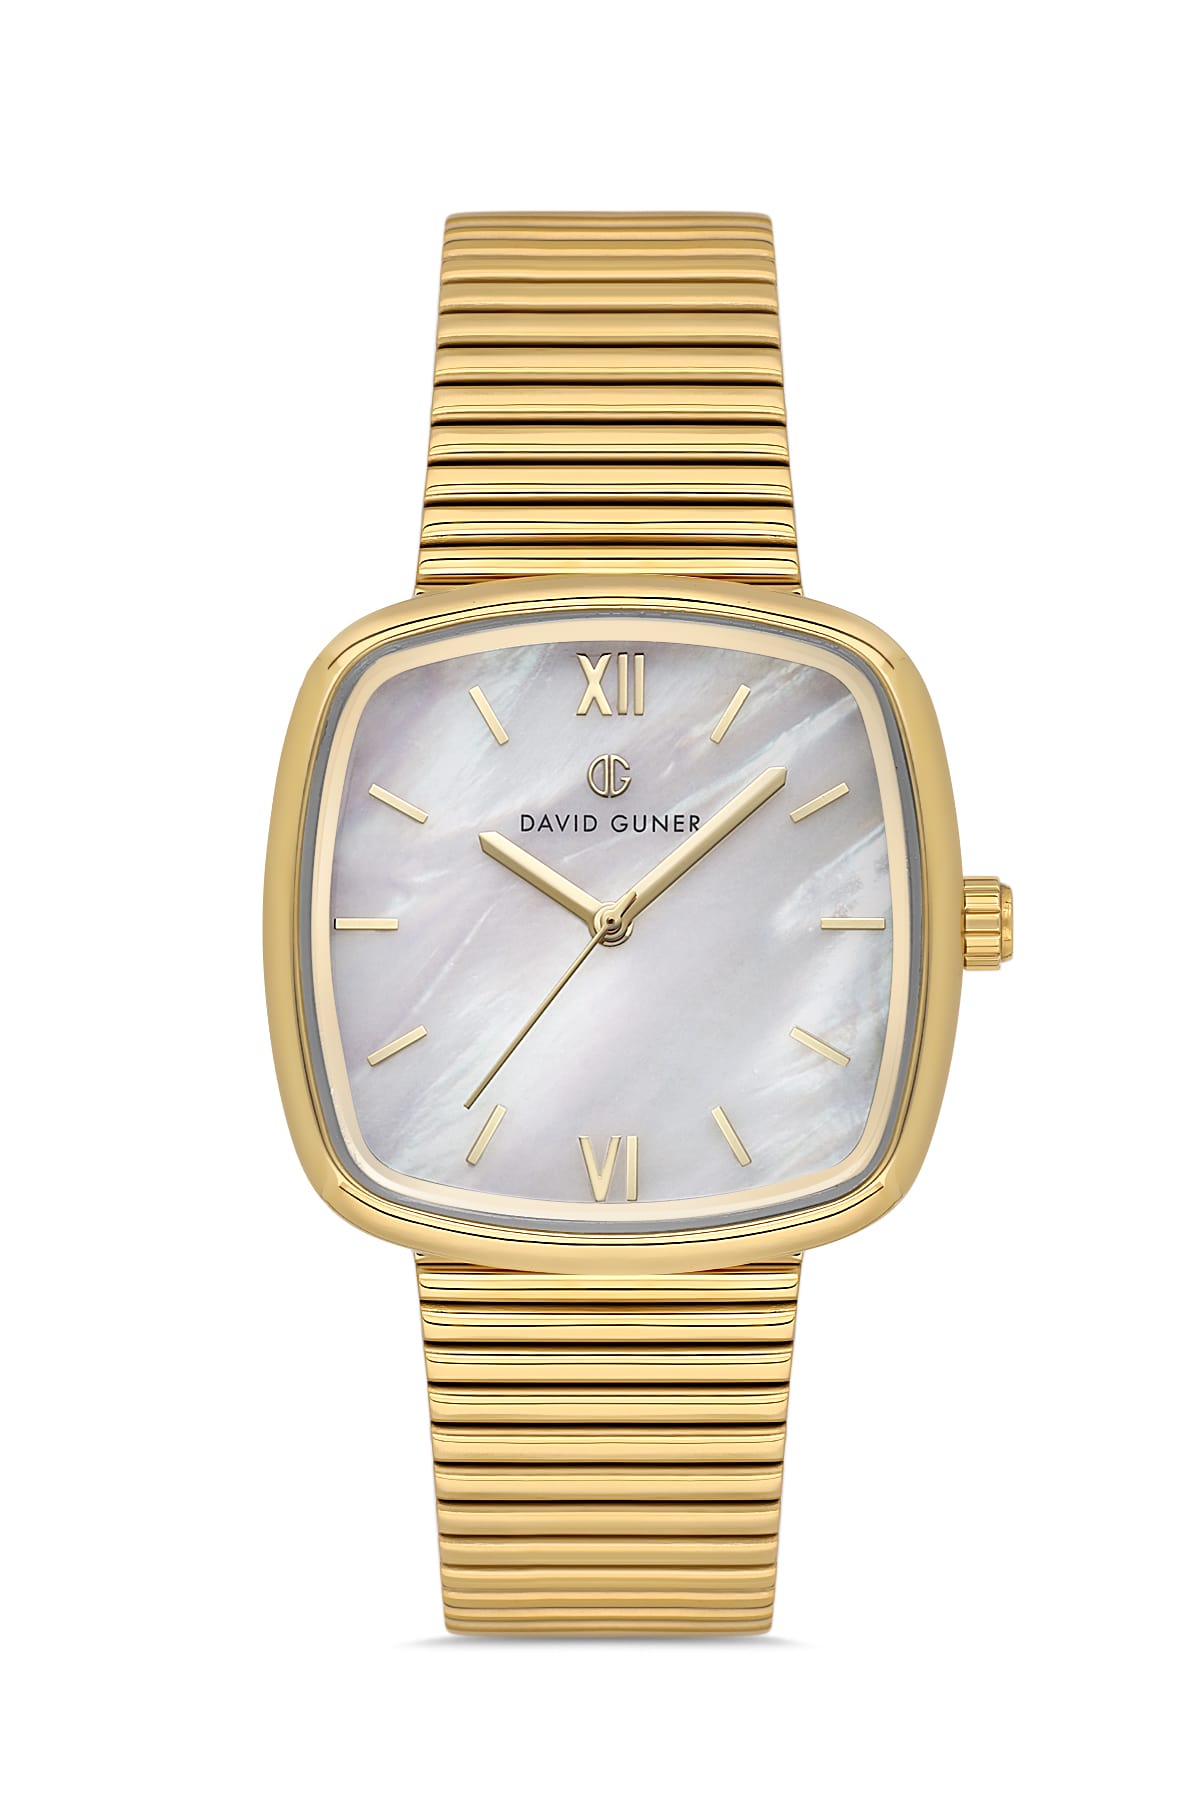 David Guner Silver Dial Yellow Plated Women's Wristwatch